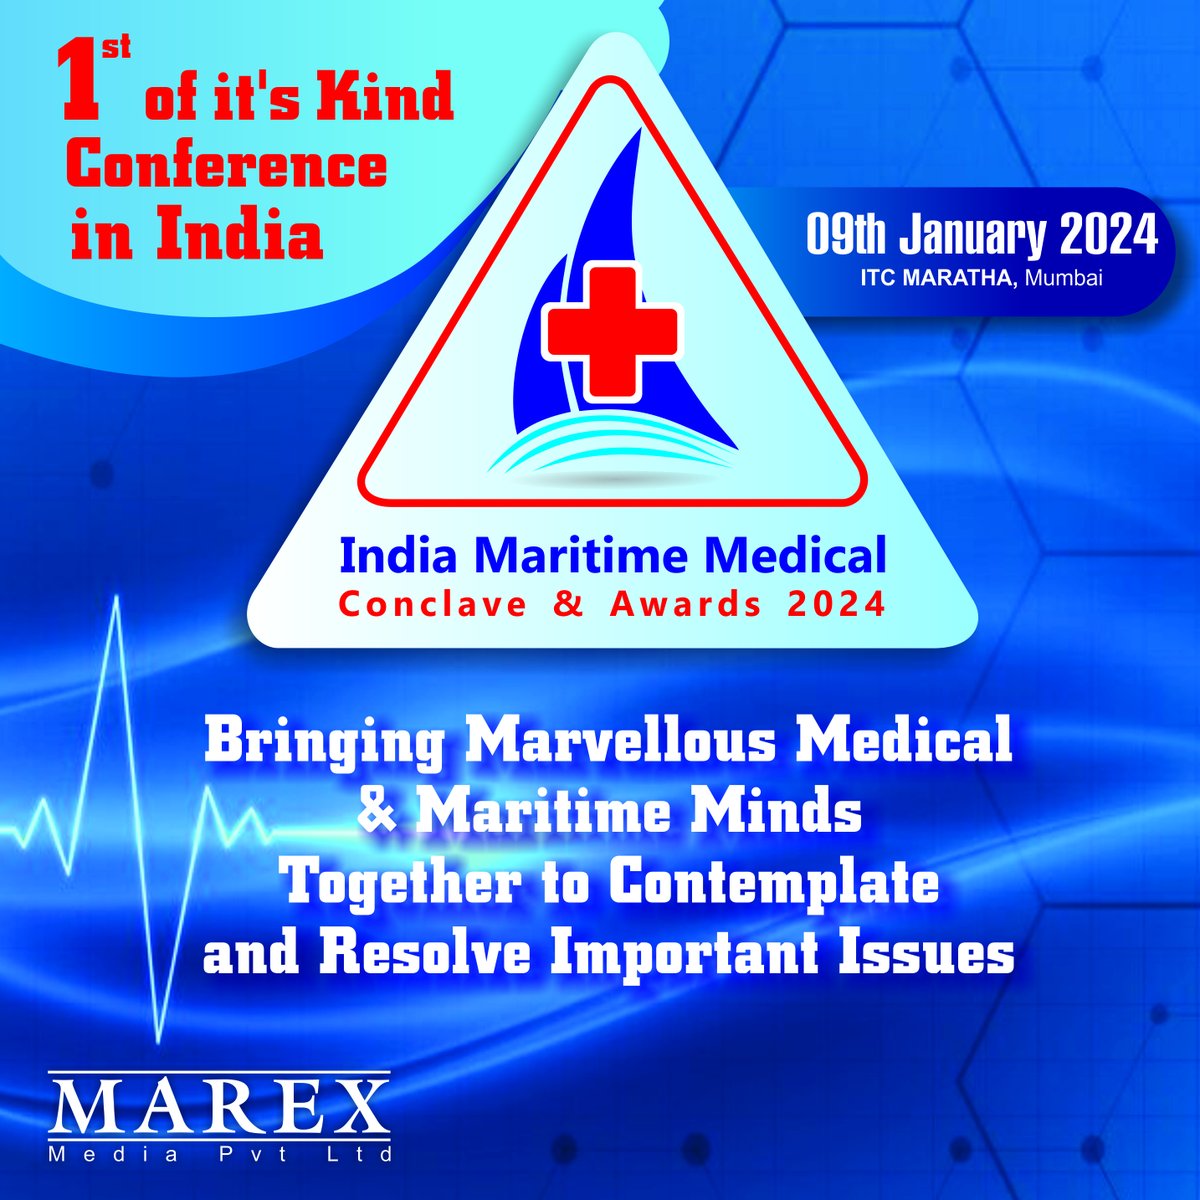 India Maritime Medical -Conclave & Awards 2024 by Marex Media on 9th Janaury 2024 at ITC Maratha.
#marinemedical #medicalconference #safetyatsea #medicineatsea #marinehealth #seasidehealth #shippinghealth #marinehealth